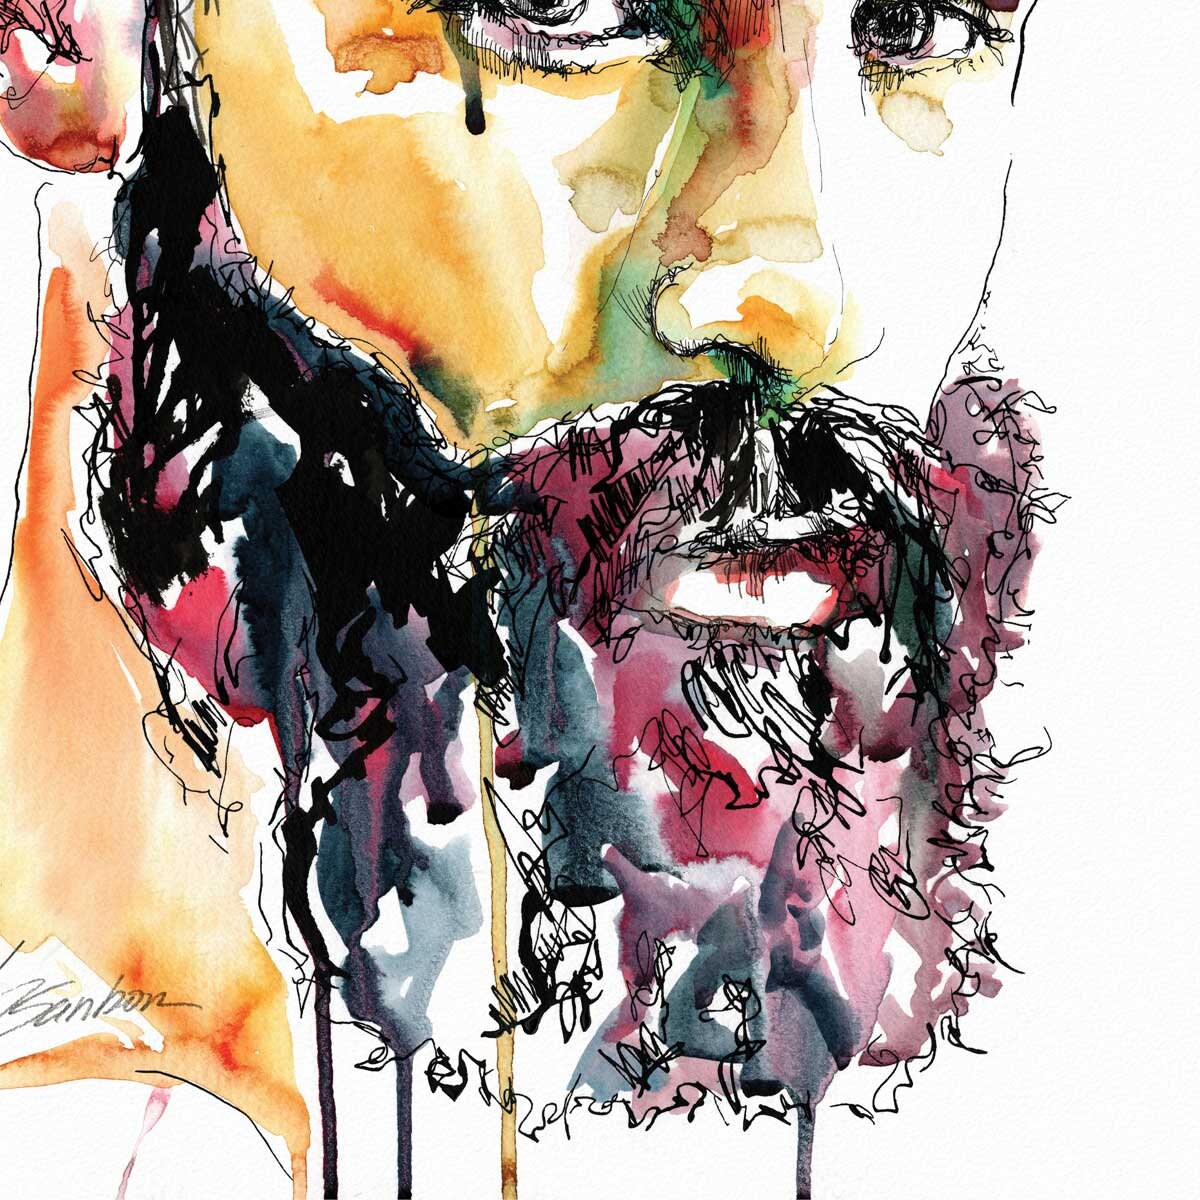 Bearded nude male figure sensual watercolor prints | homoerotic art print | erotica poster | gay artwork | watercolors for sale online